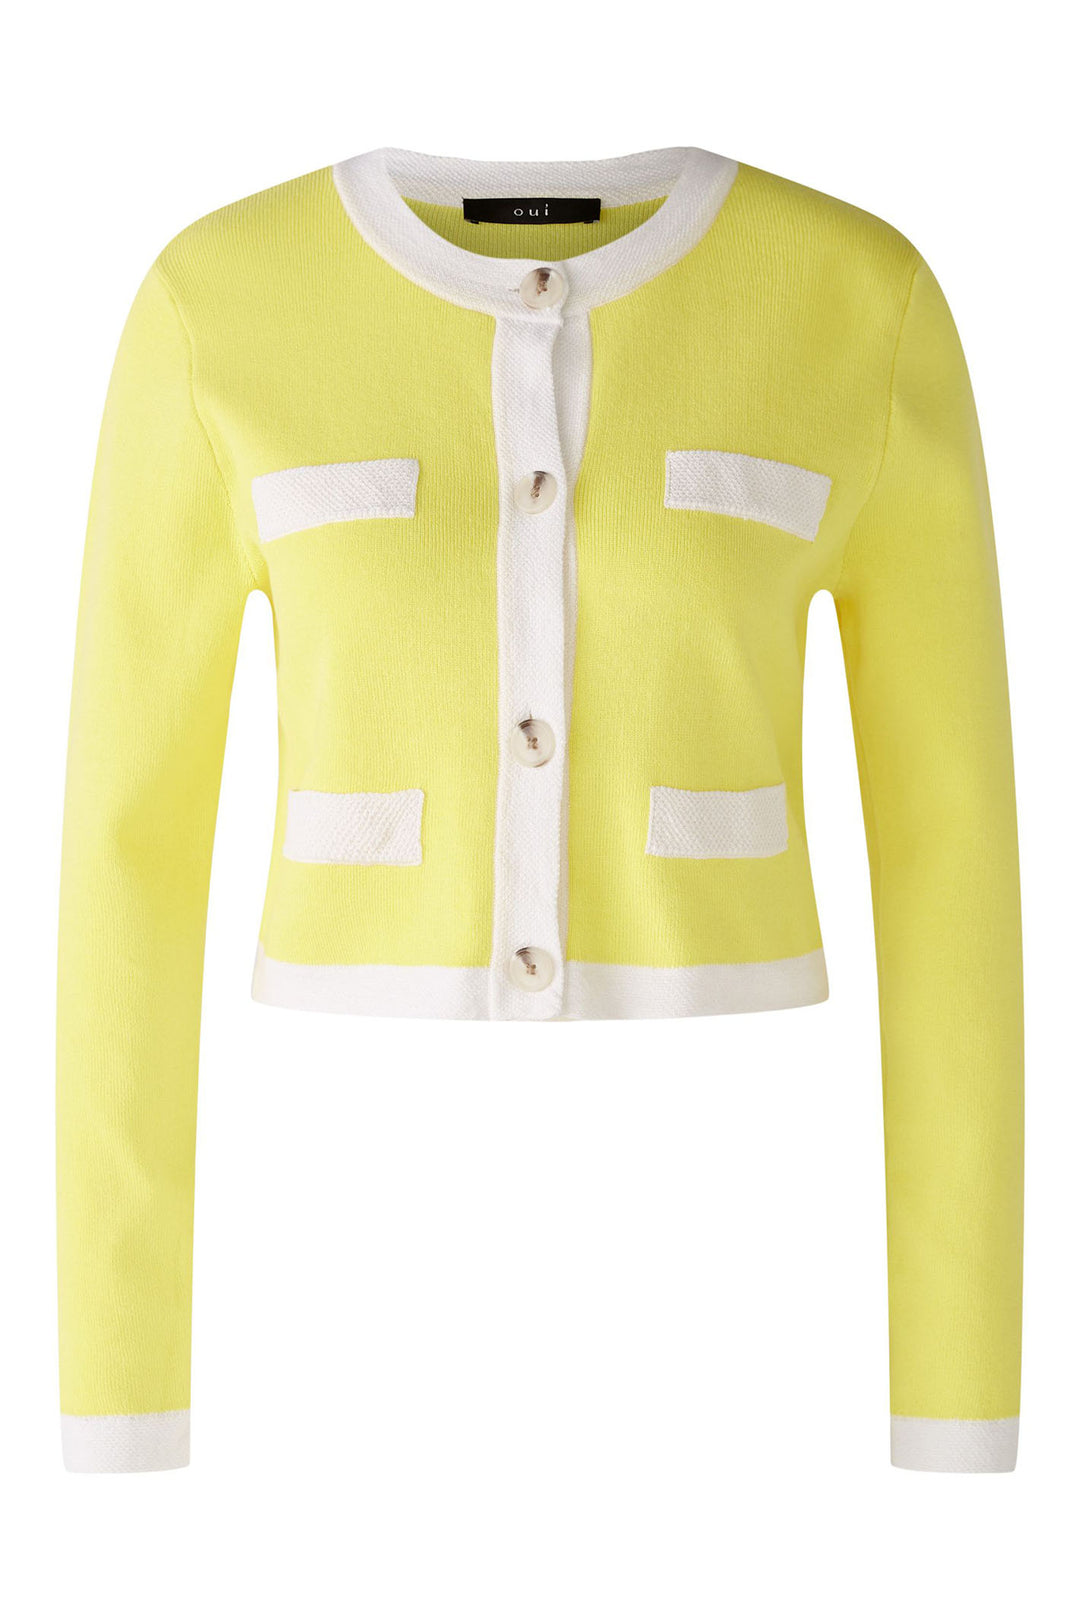 Oui 87303 Yellow White Cardigan - Olivia Grace Fashion